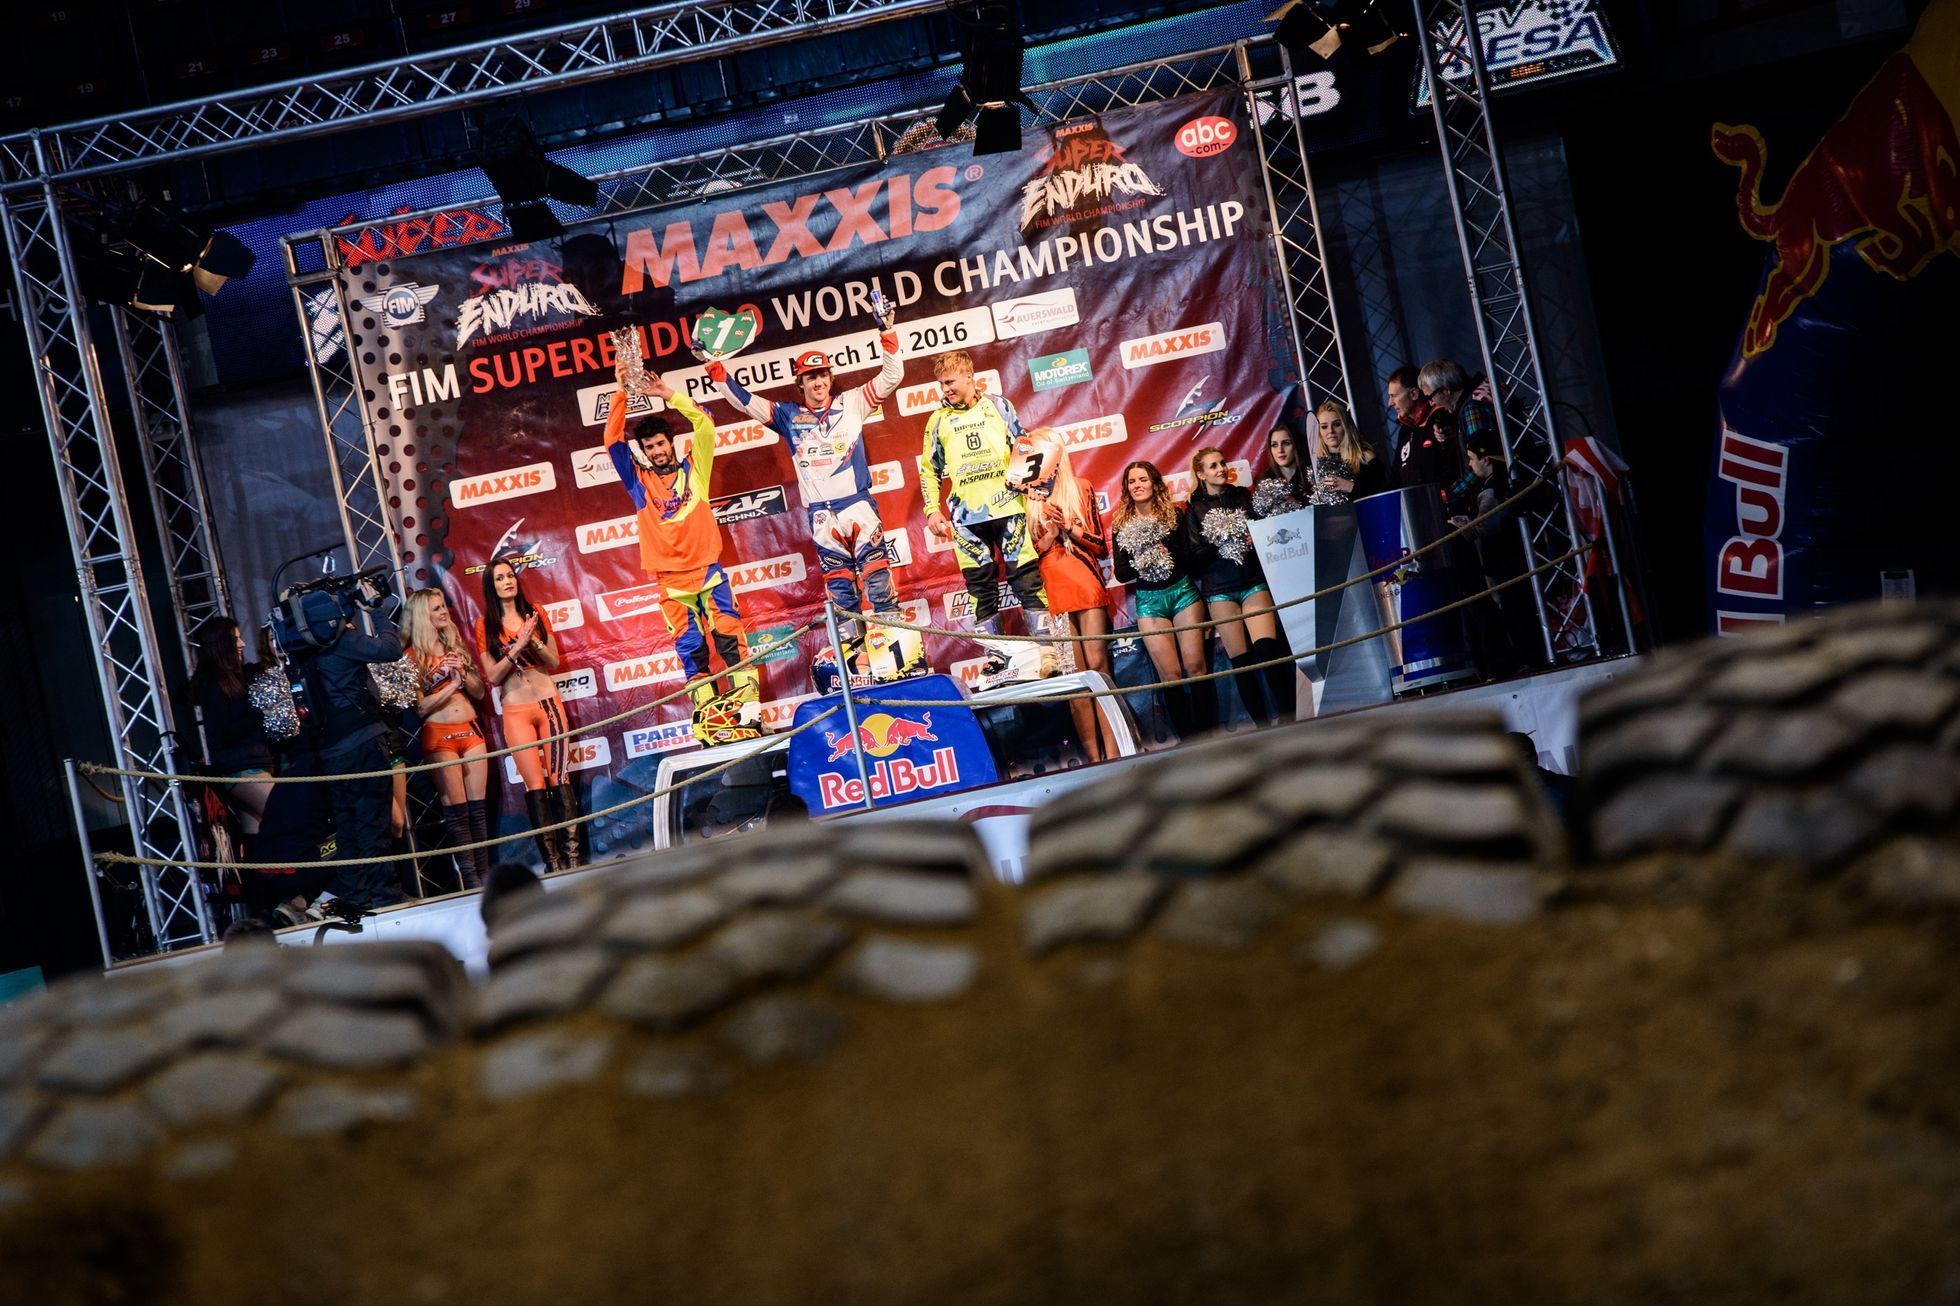 MAXXIS FIM Mistrovství světa v SuperEnduru, Praha 2016